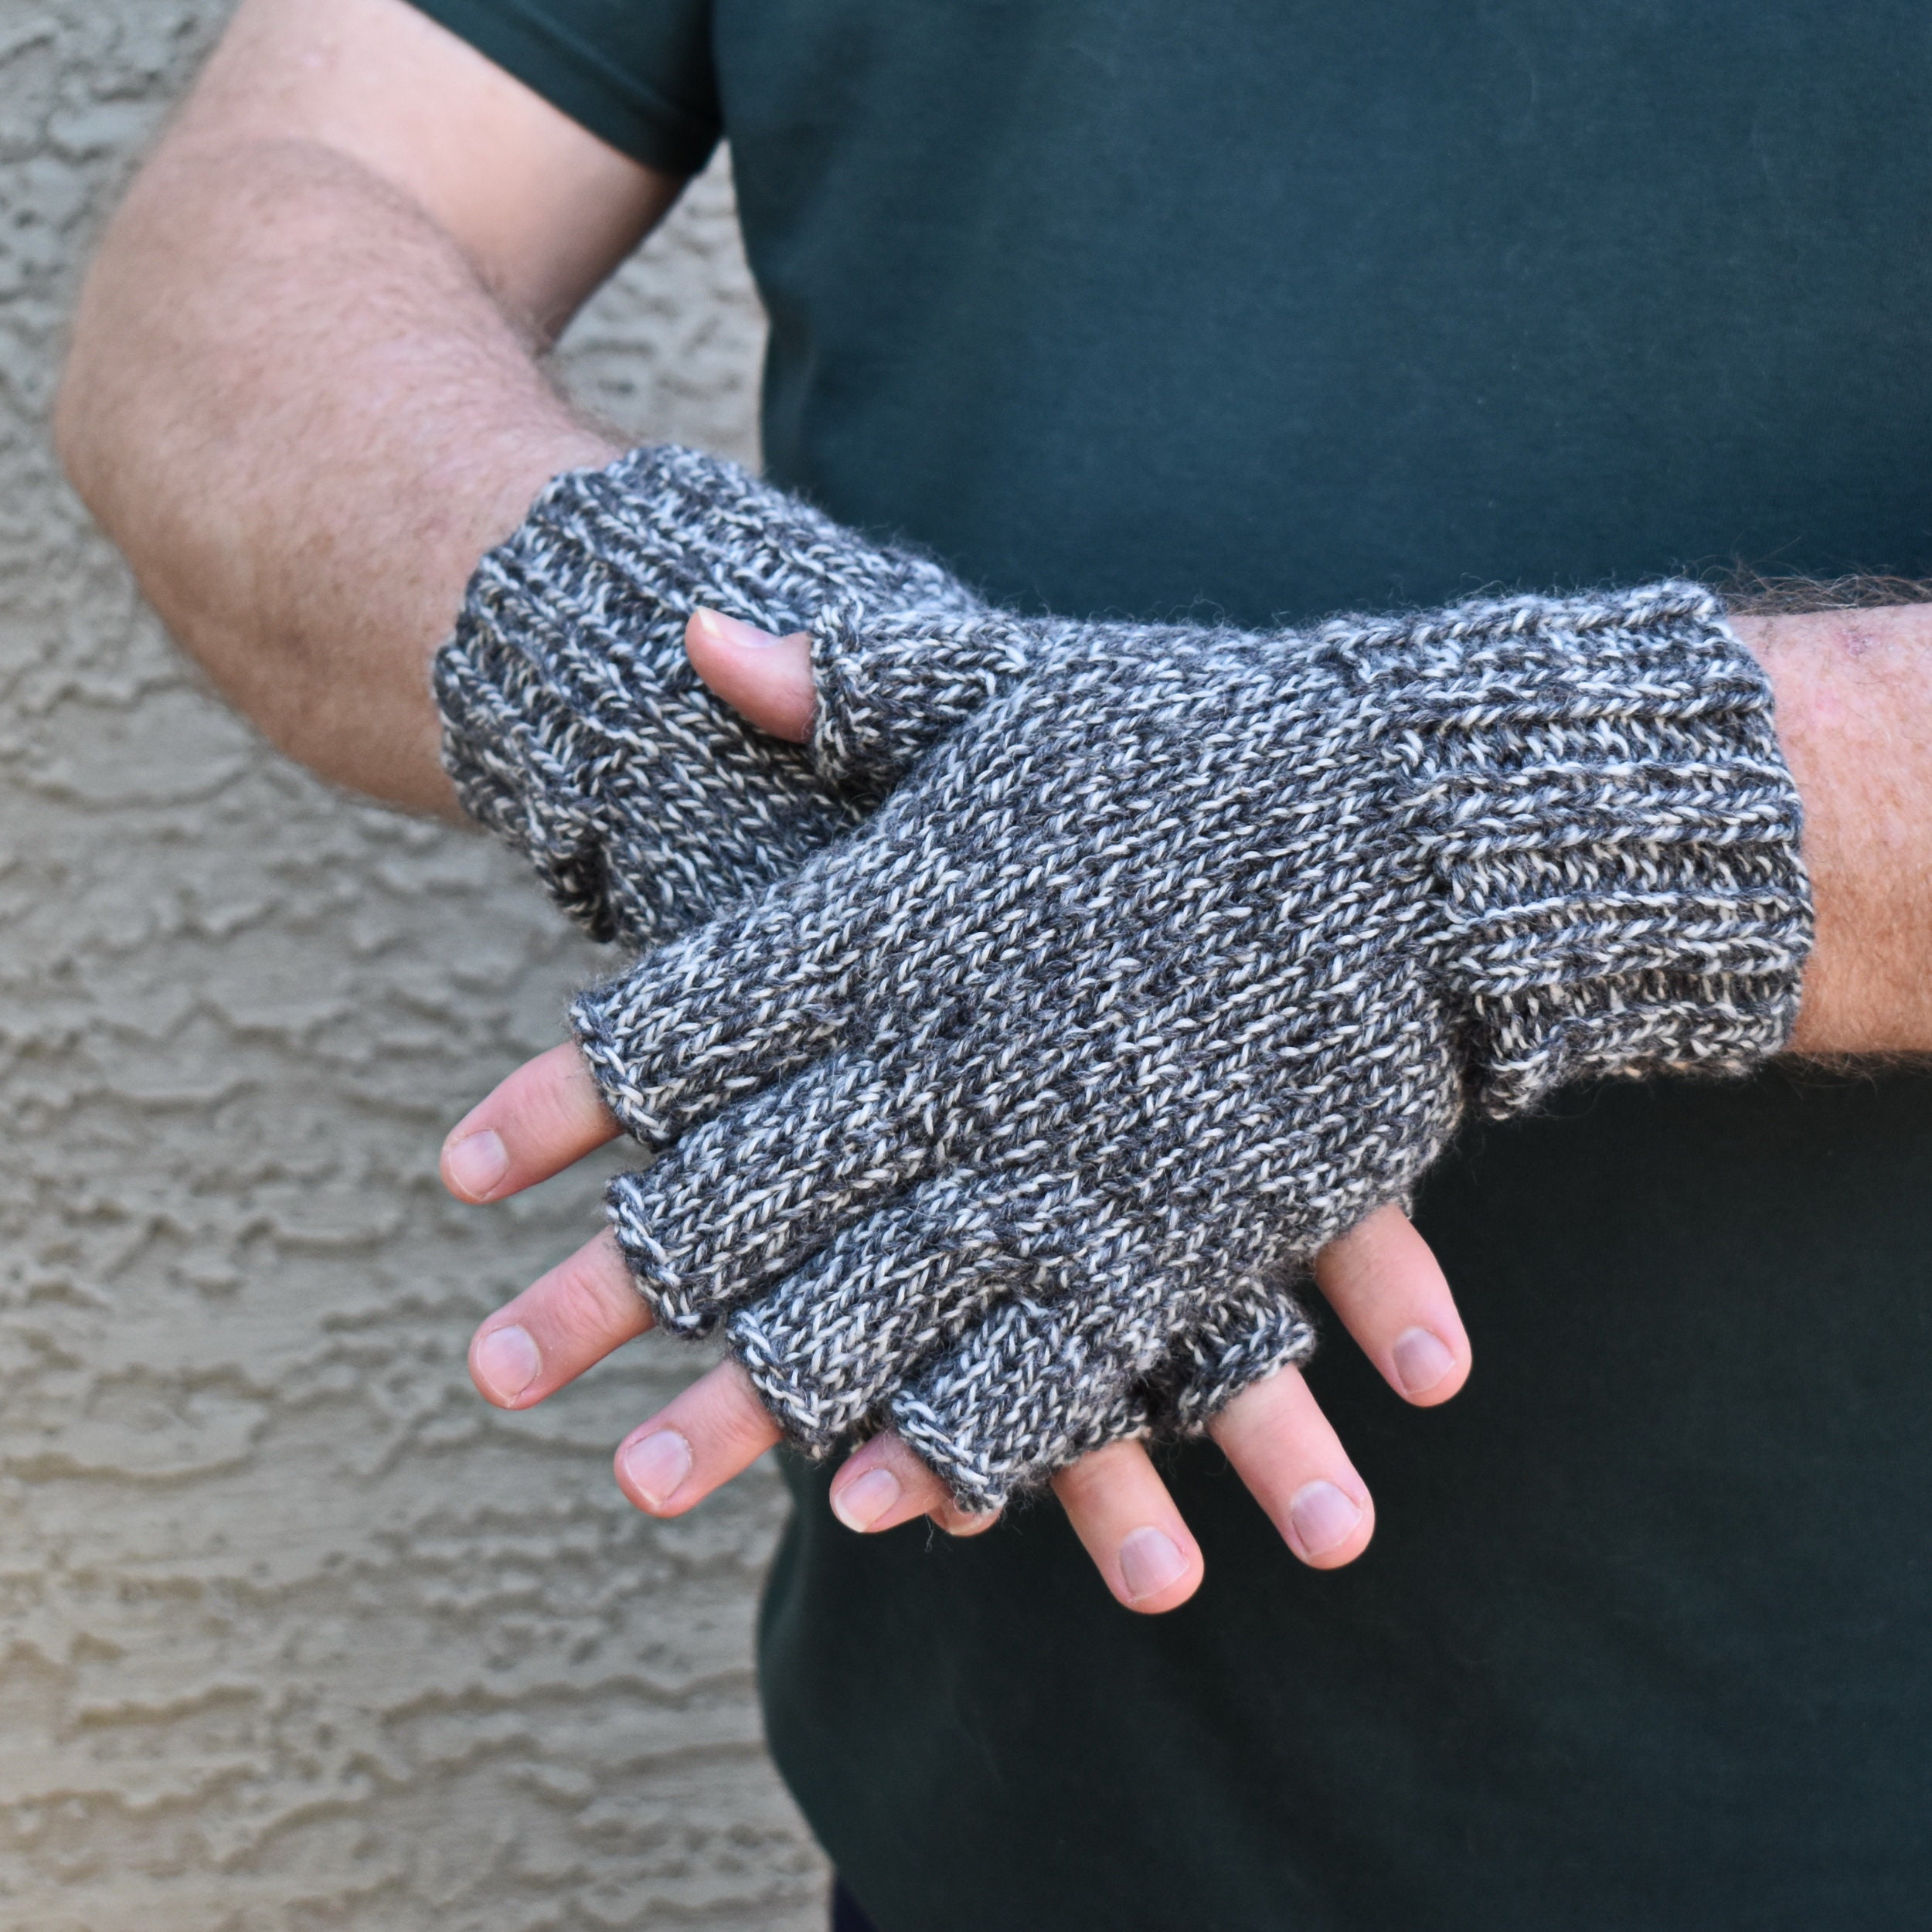 Mens Fingerless Gloves 100% Merino Wool Speckled Black and White Knit Mittens Texting Hiking Gloves Handmade Gift Christmas Winter Holidays